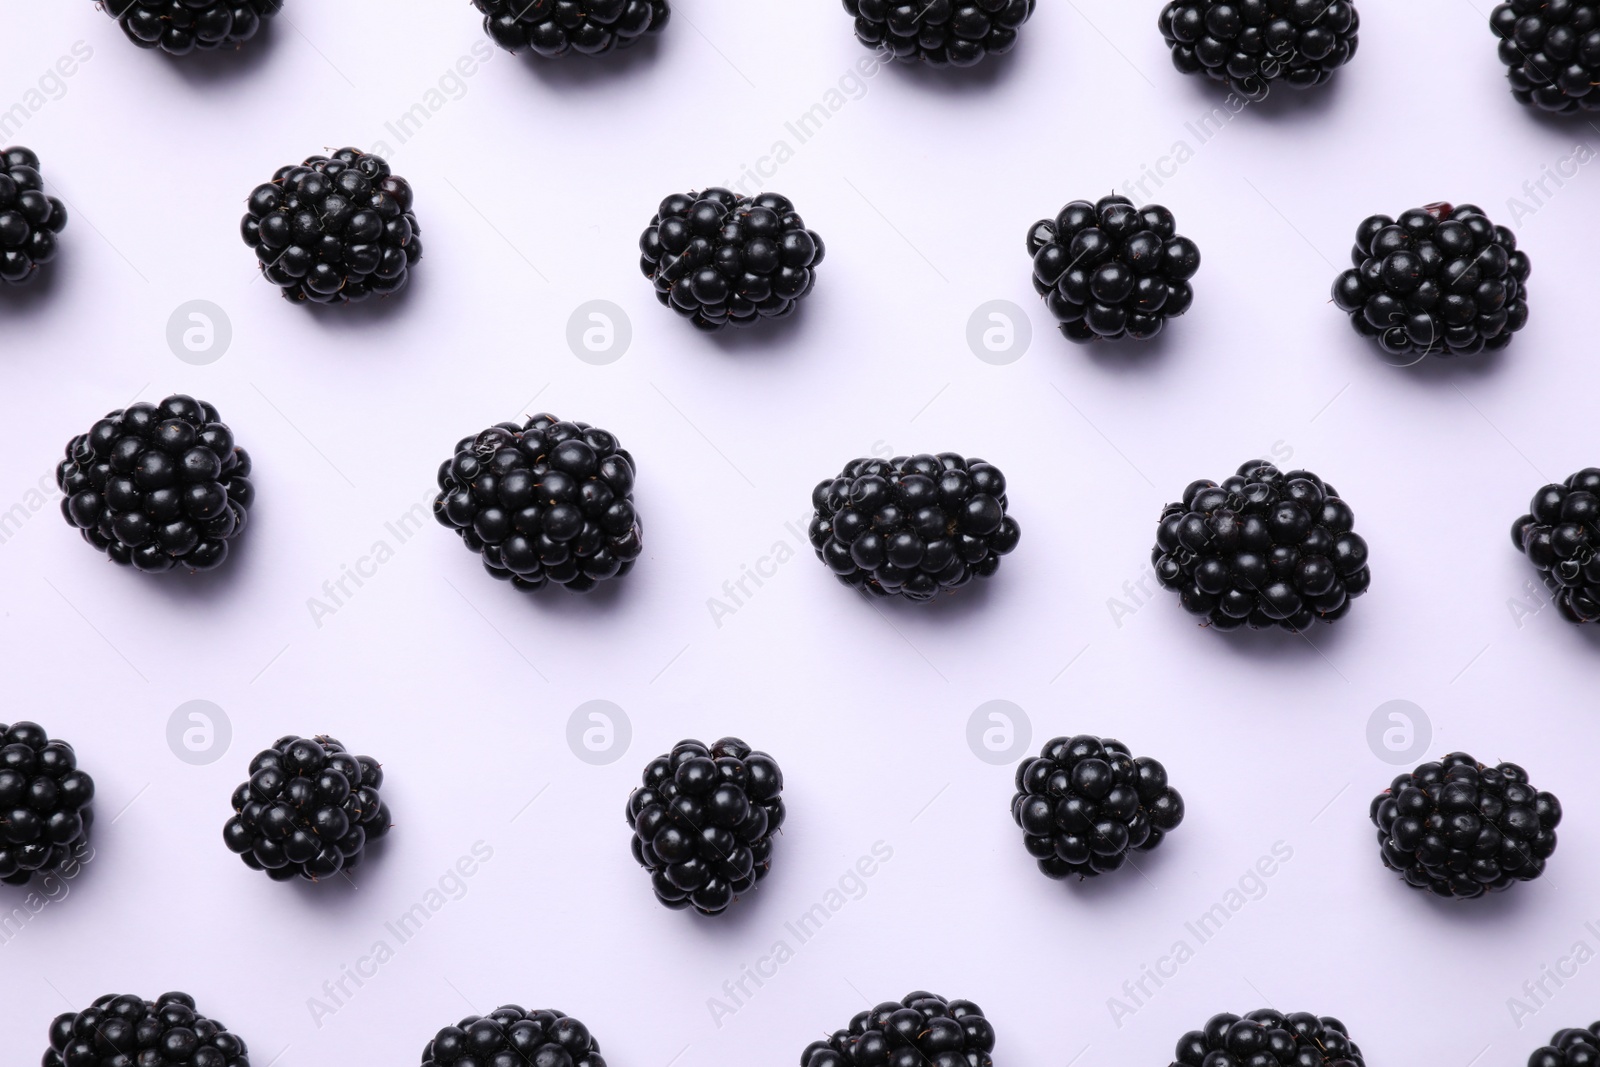 Photo of Tasty ripe blackberries on white background, flat lay